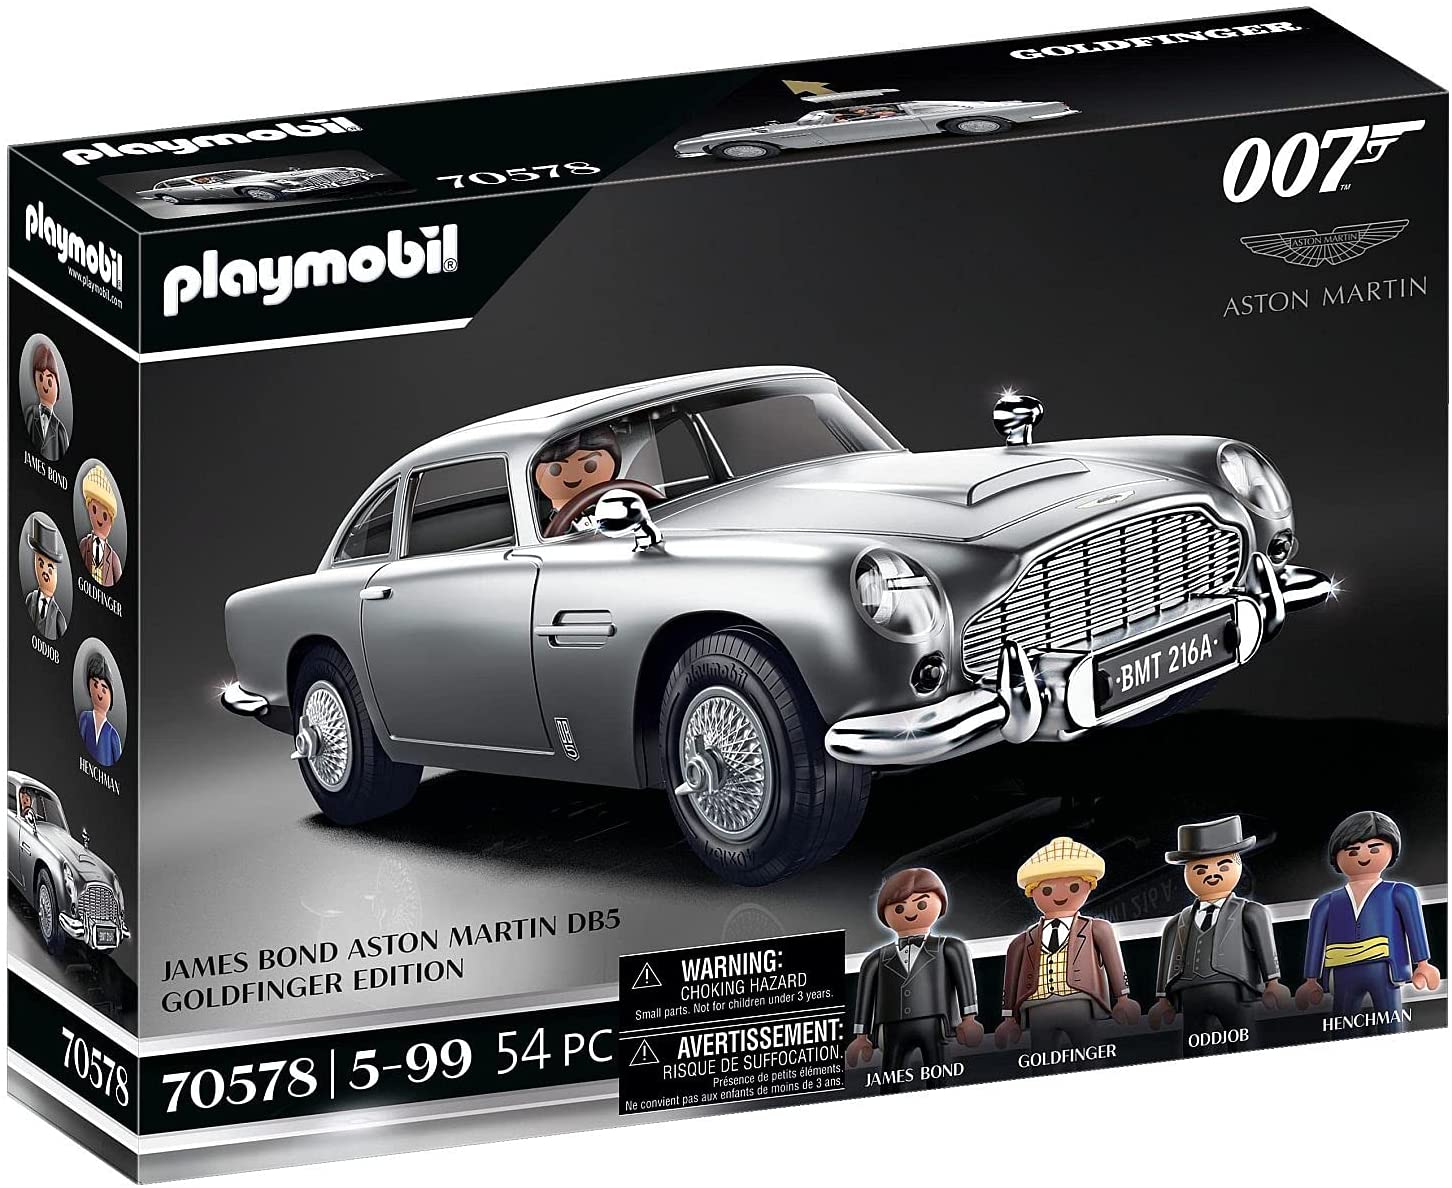 PLAYMOBIL 70578 James Bond Aston Martin DB5 - Goldfinger edition, for James